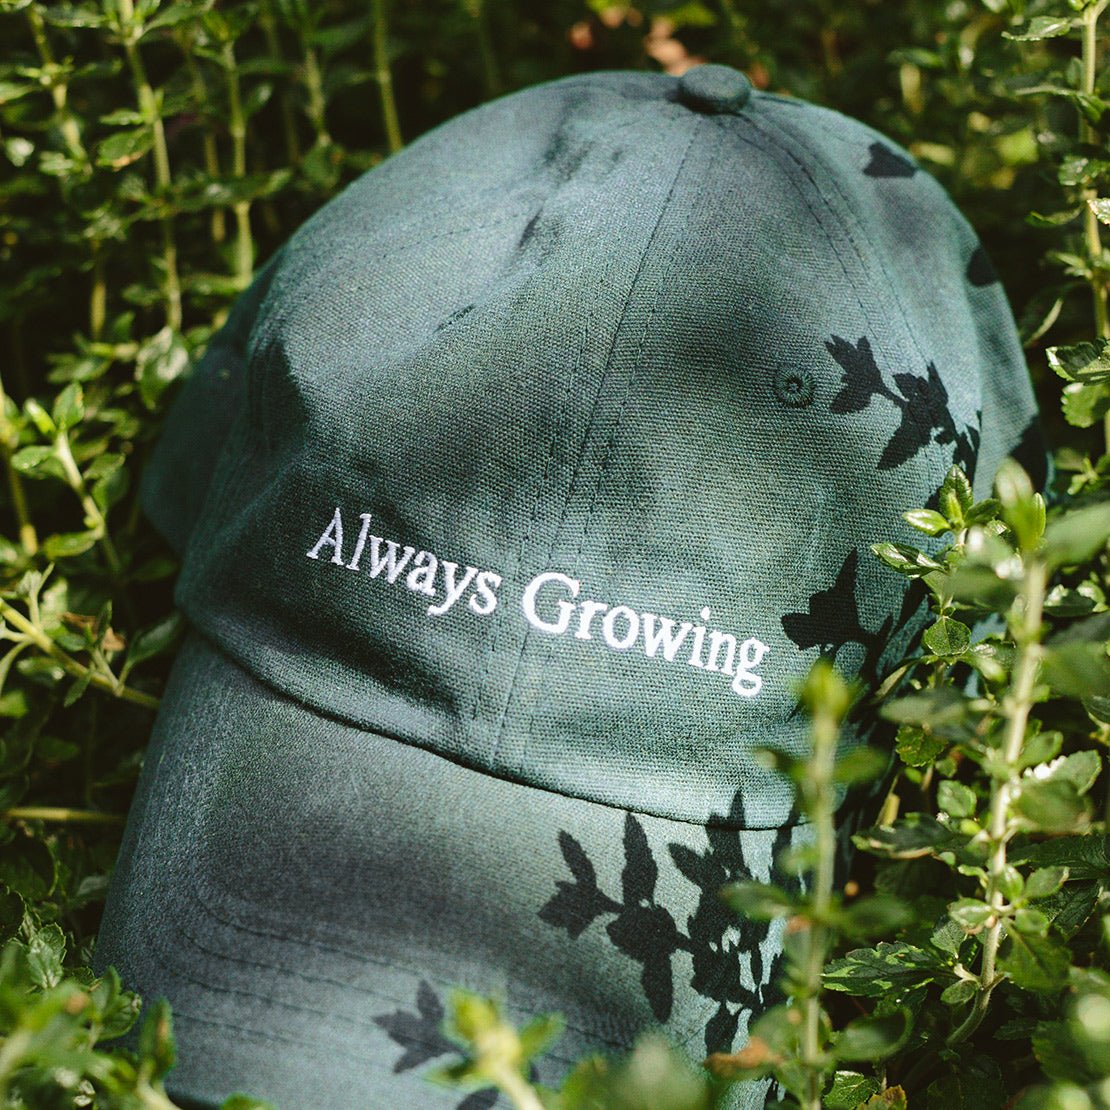 Always Growing Hat - Arber